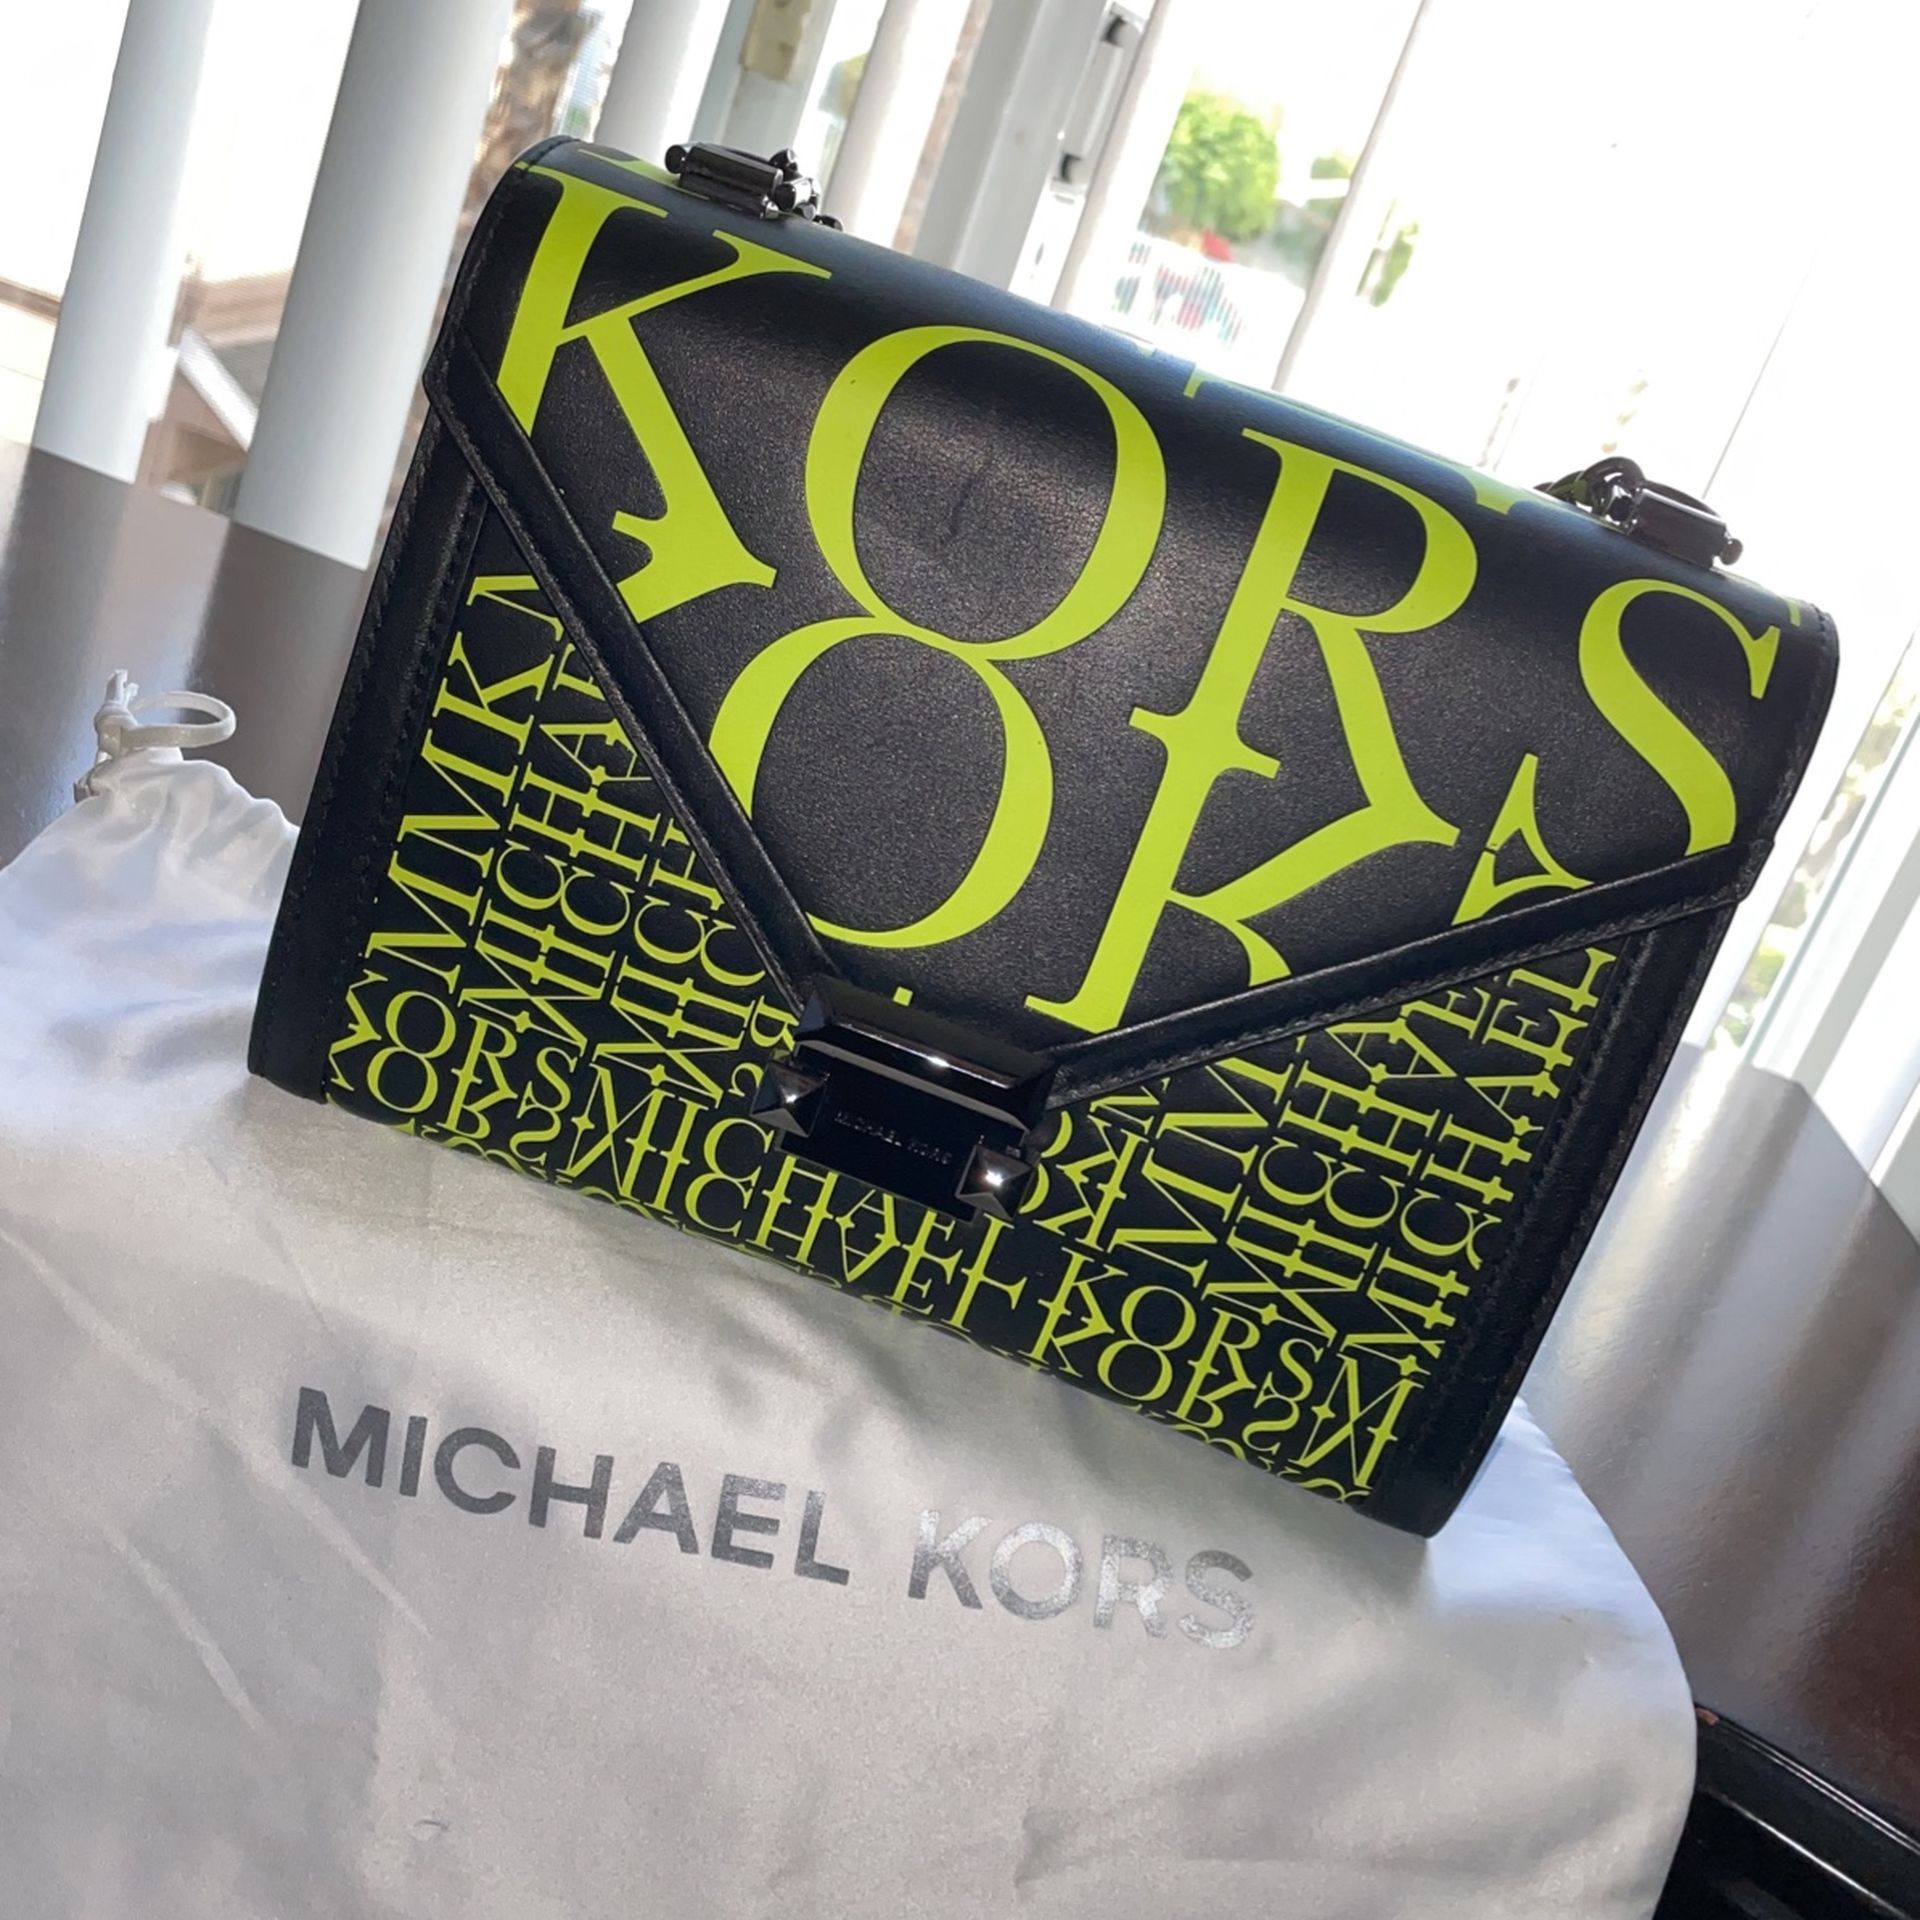 Michael Kors Limited Edition 